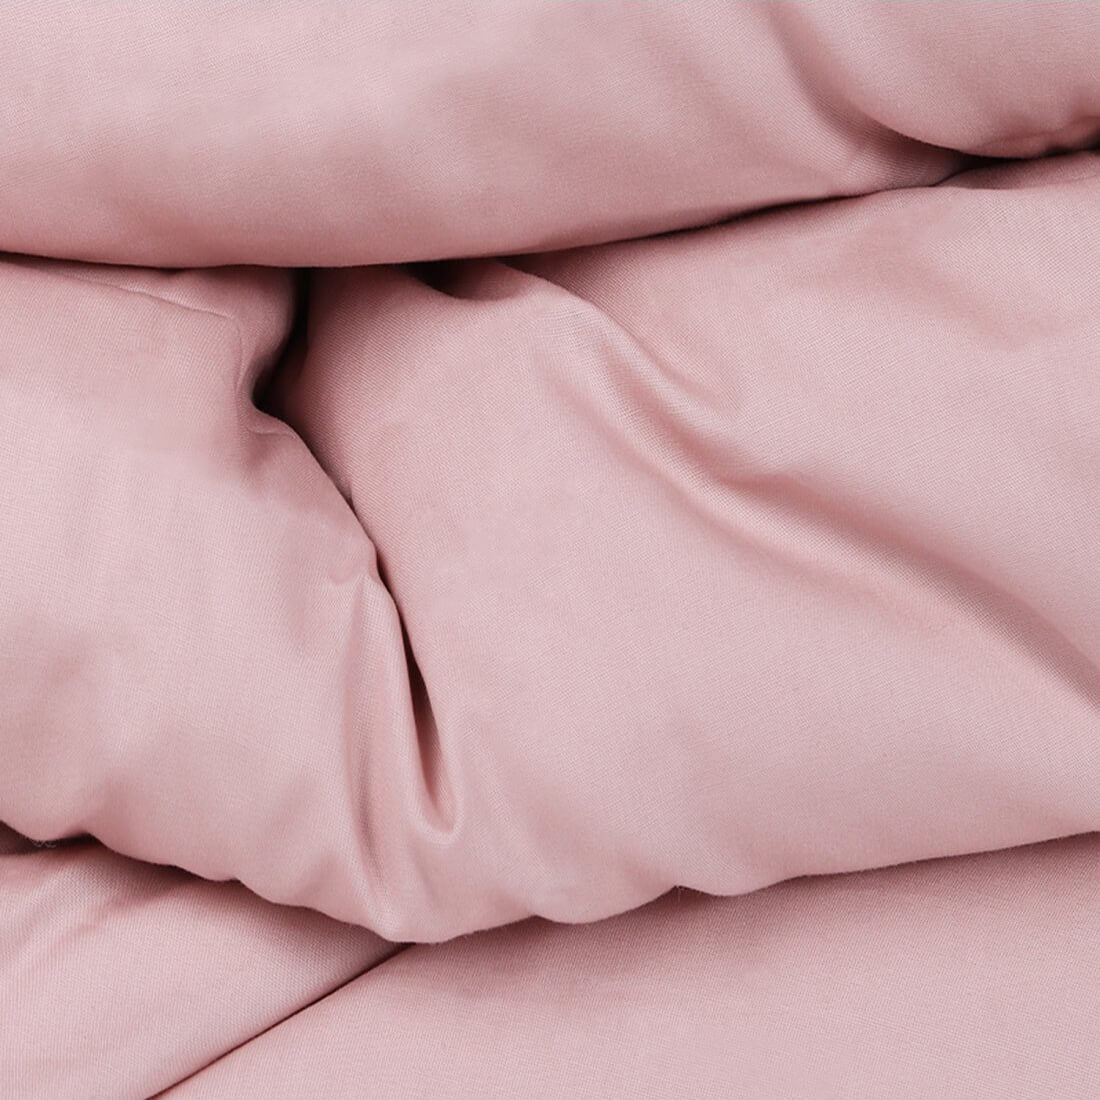 Funda nórdica 100% algodón percal, 180 hilos. Color rosa palo.